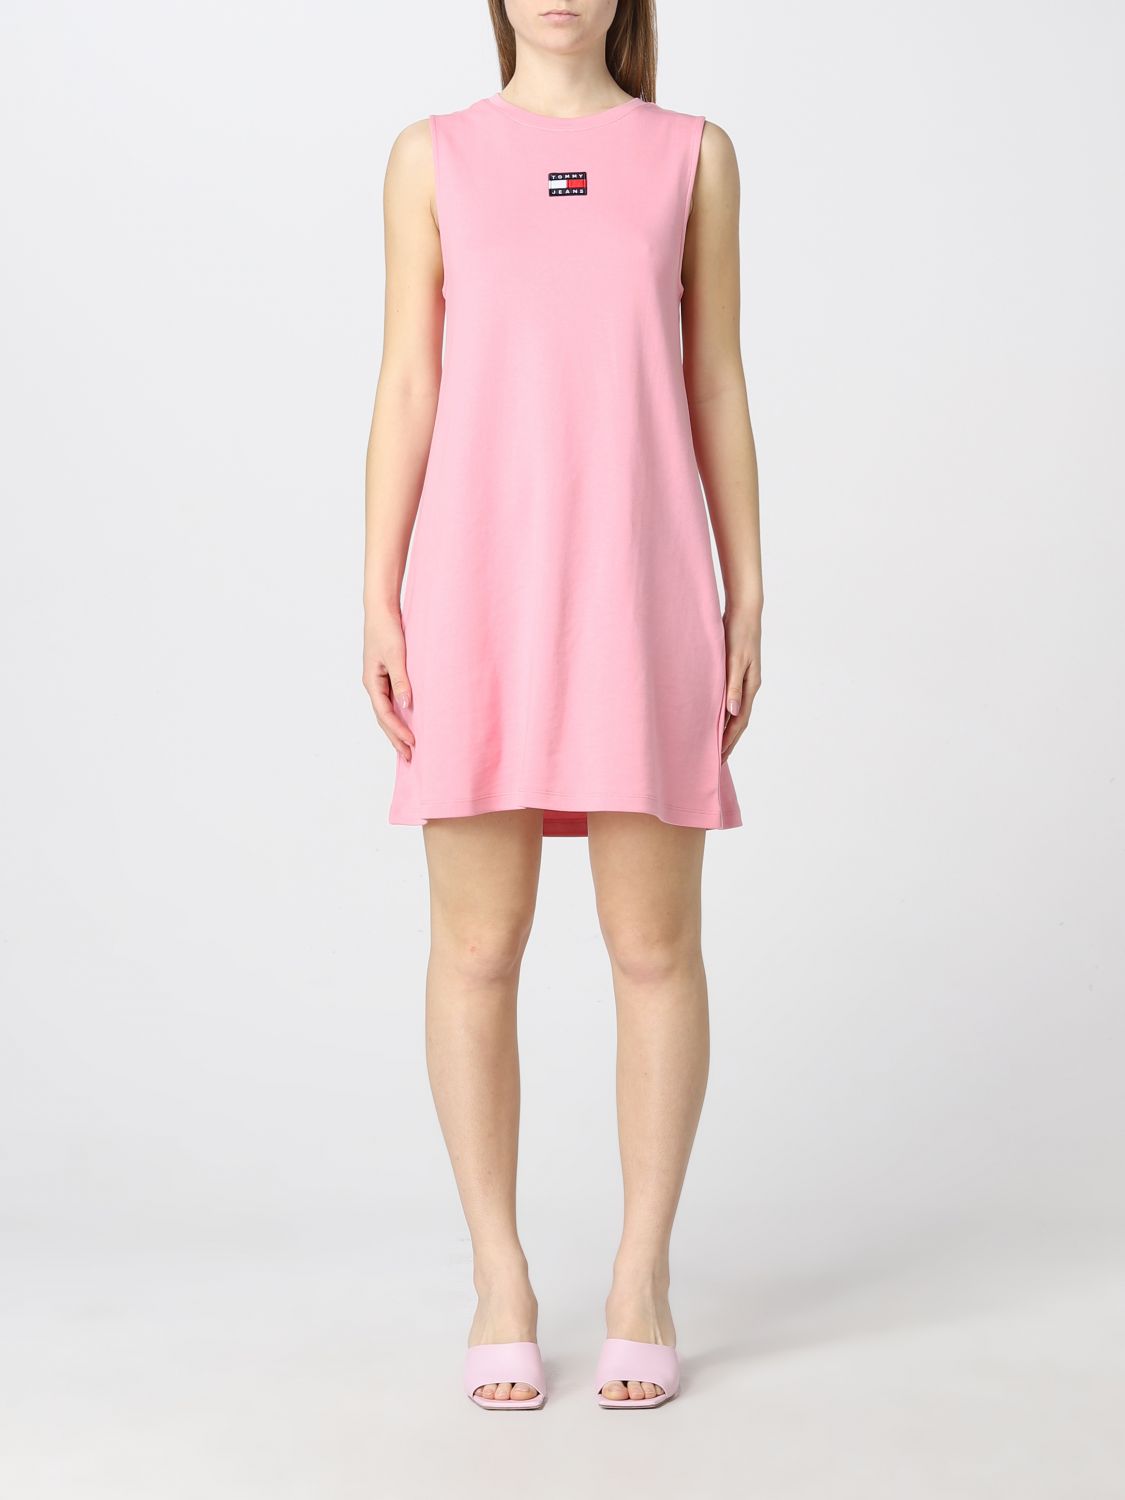 TOMMY HILFIGER: dress for woman - Pink | Tommy Hilfiger dress online on GIGLIO.COM